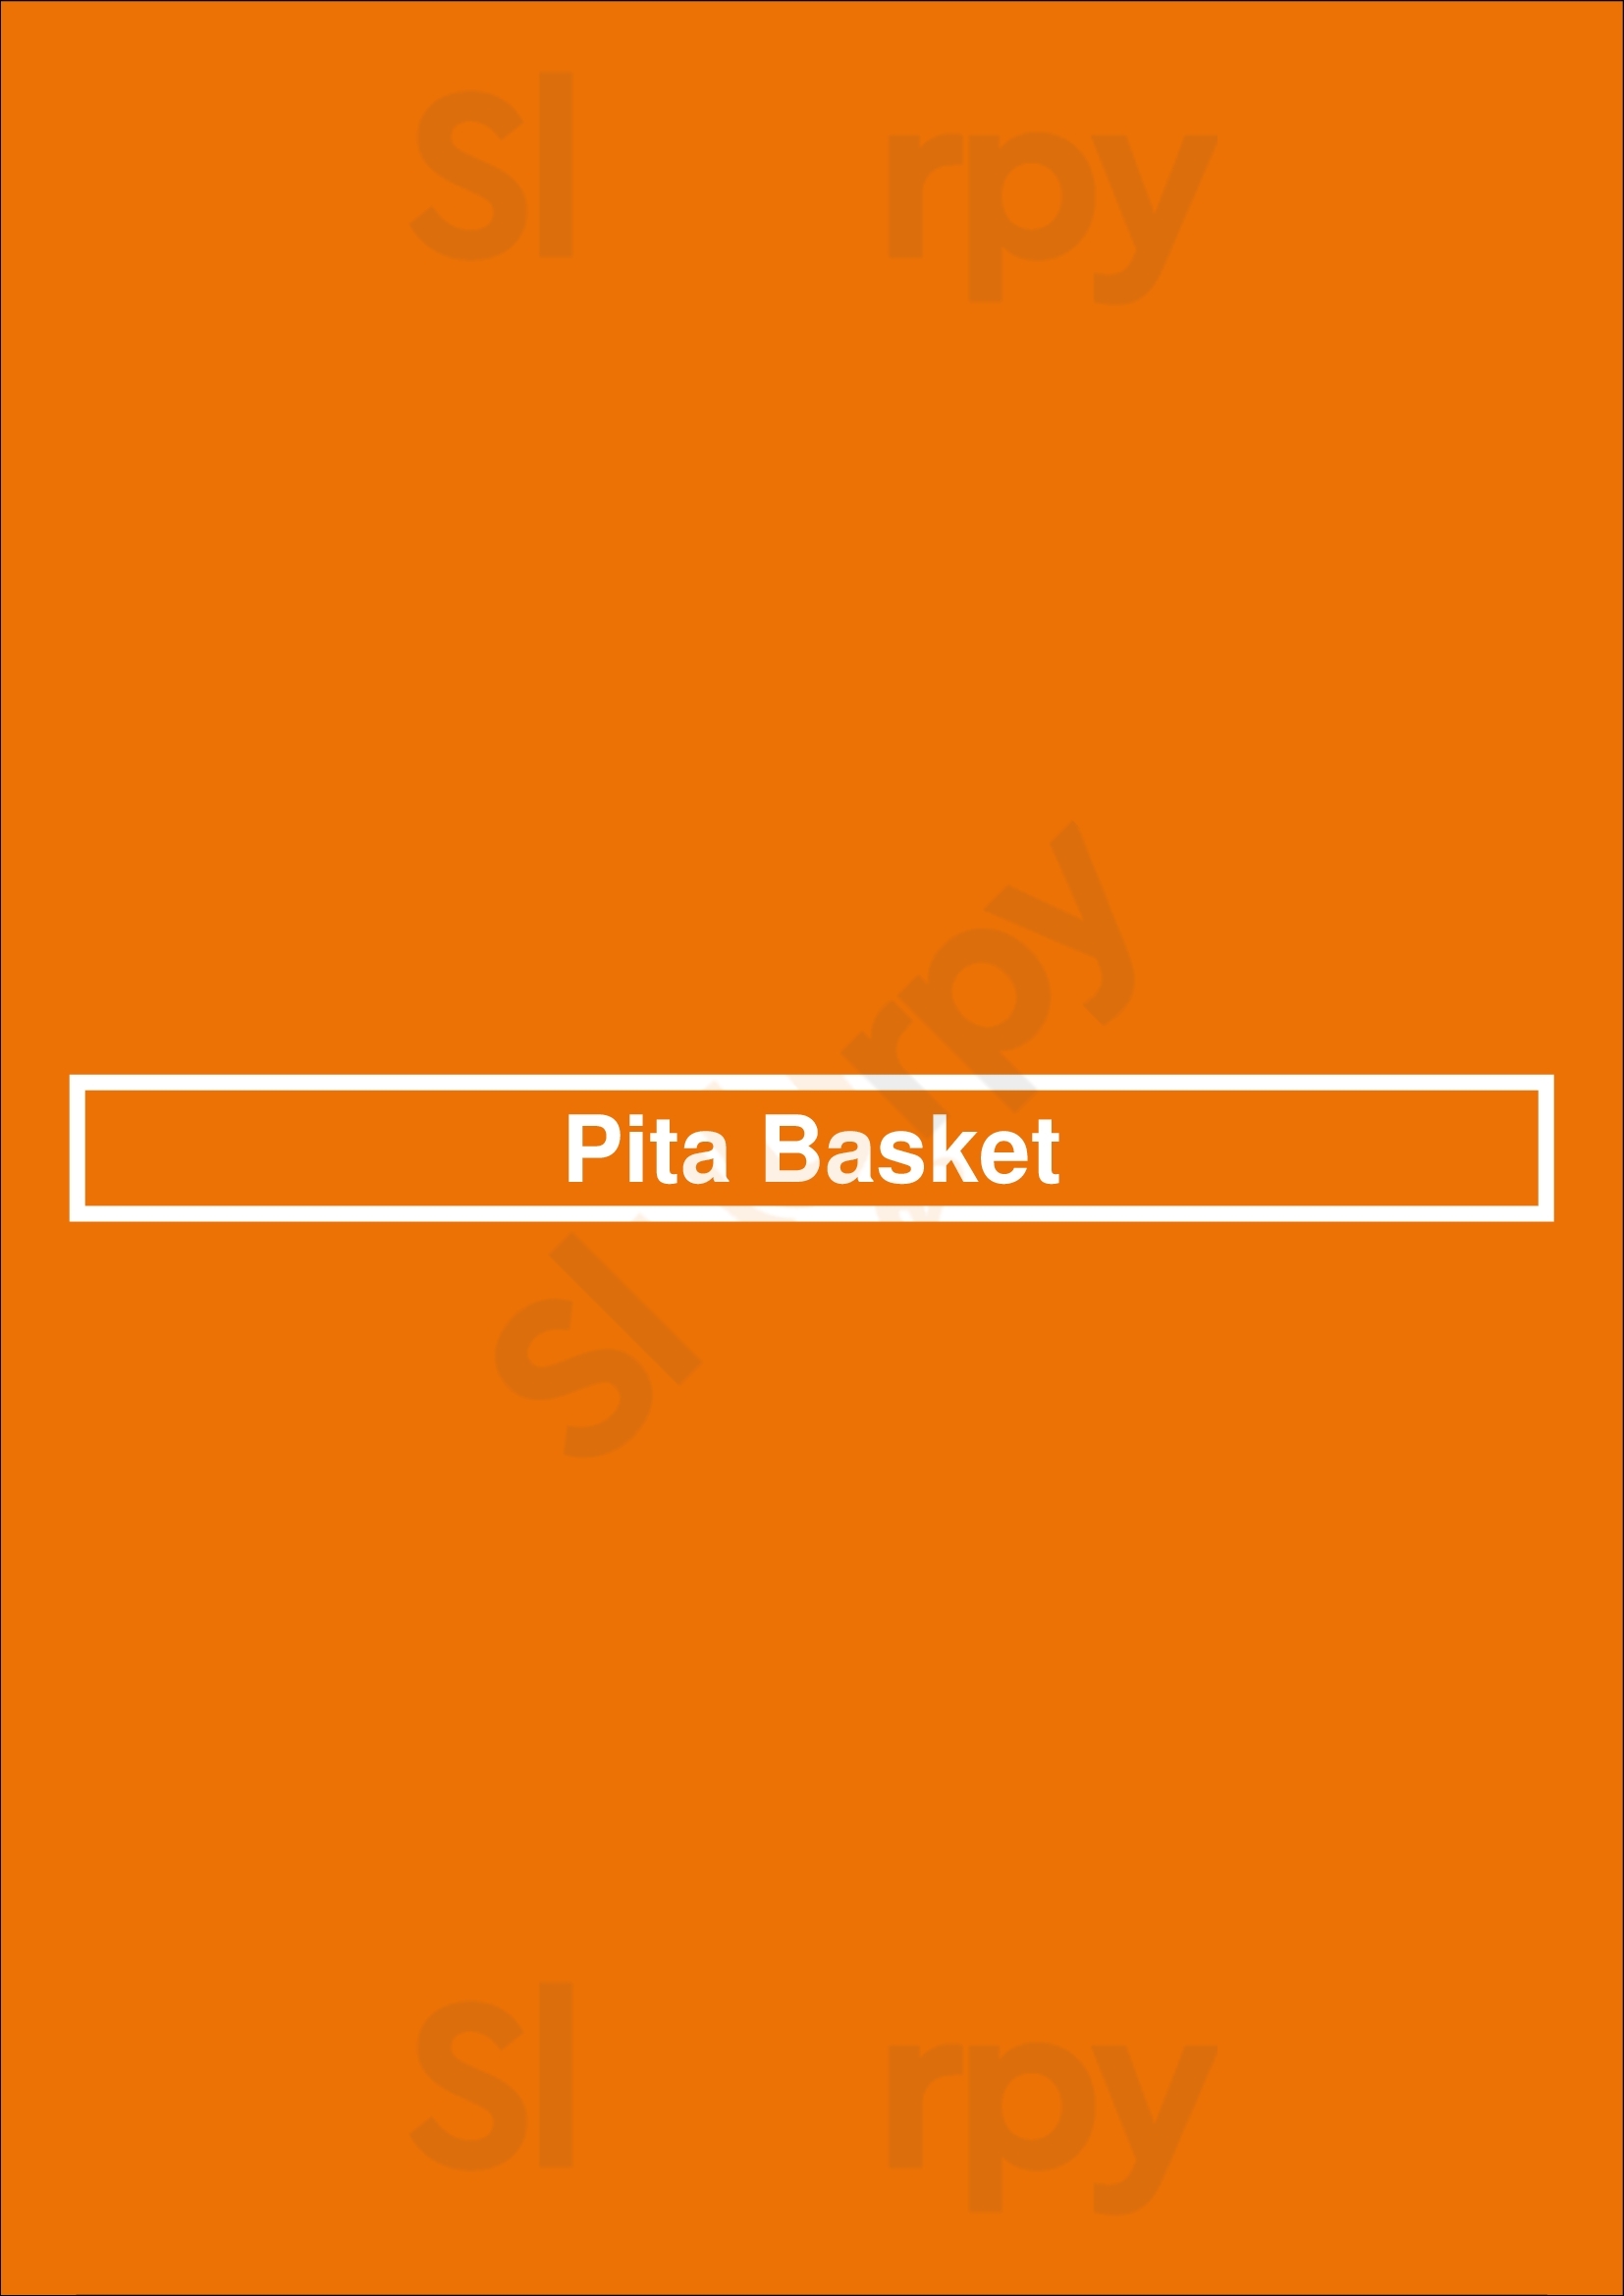 Pita Basket Sunridge Calgary Menu - 1